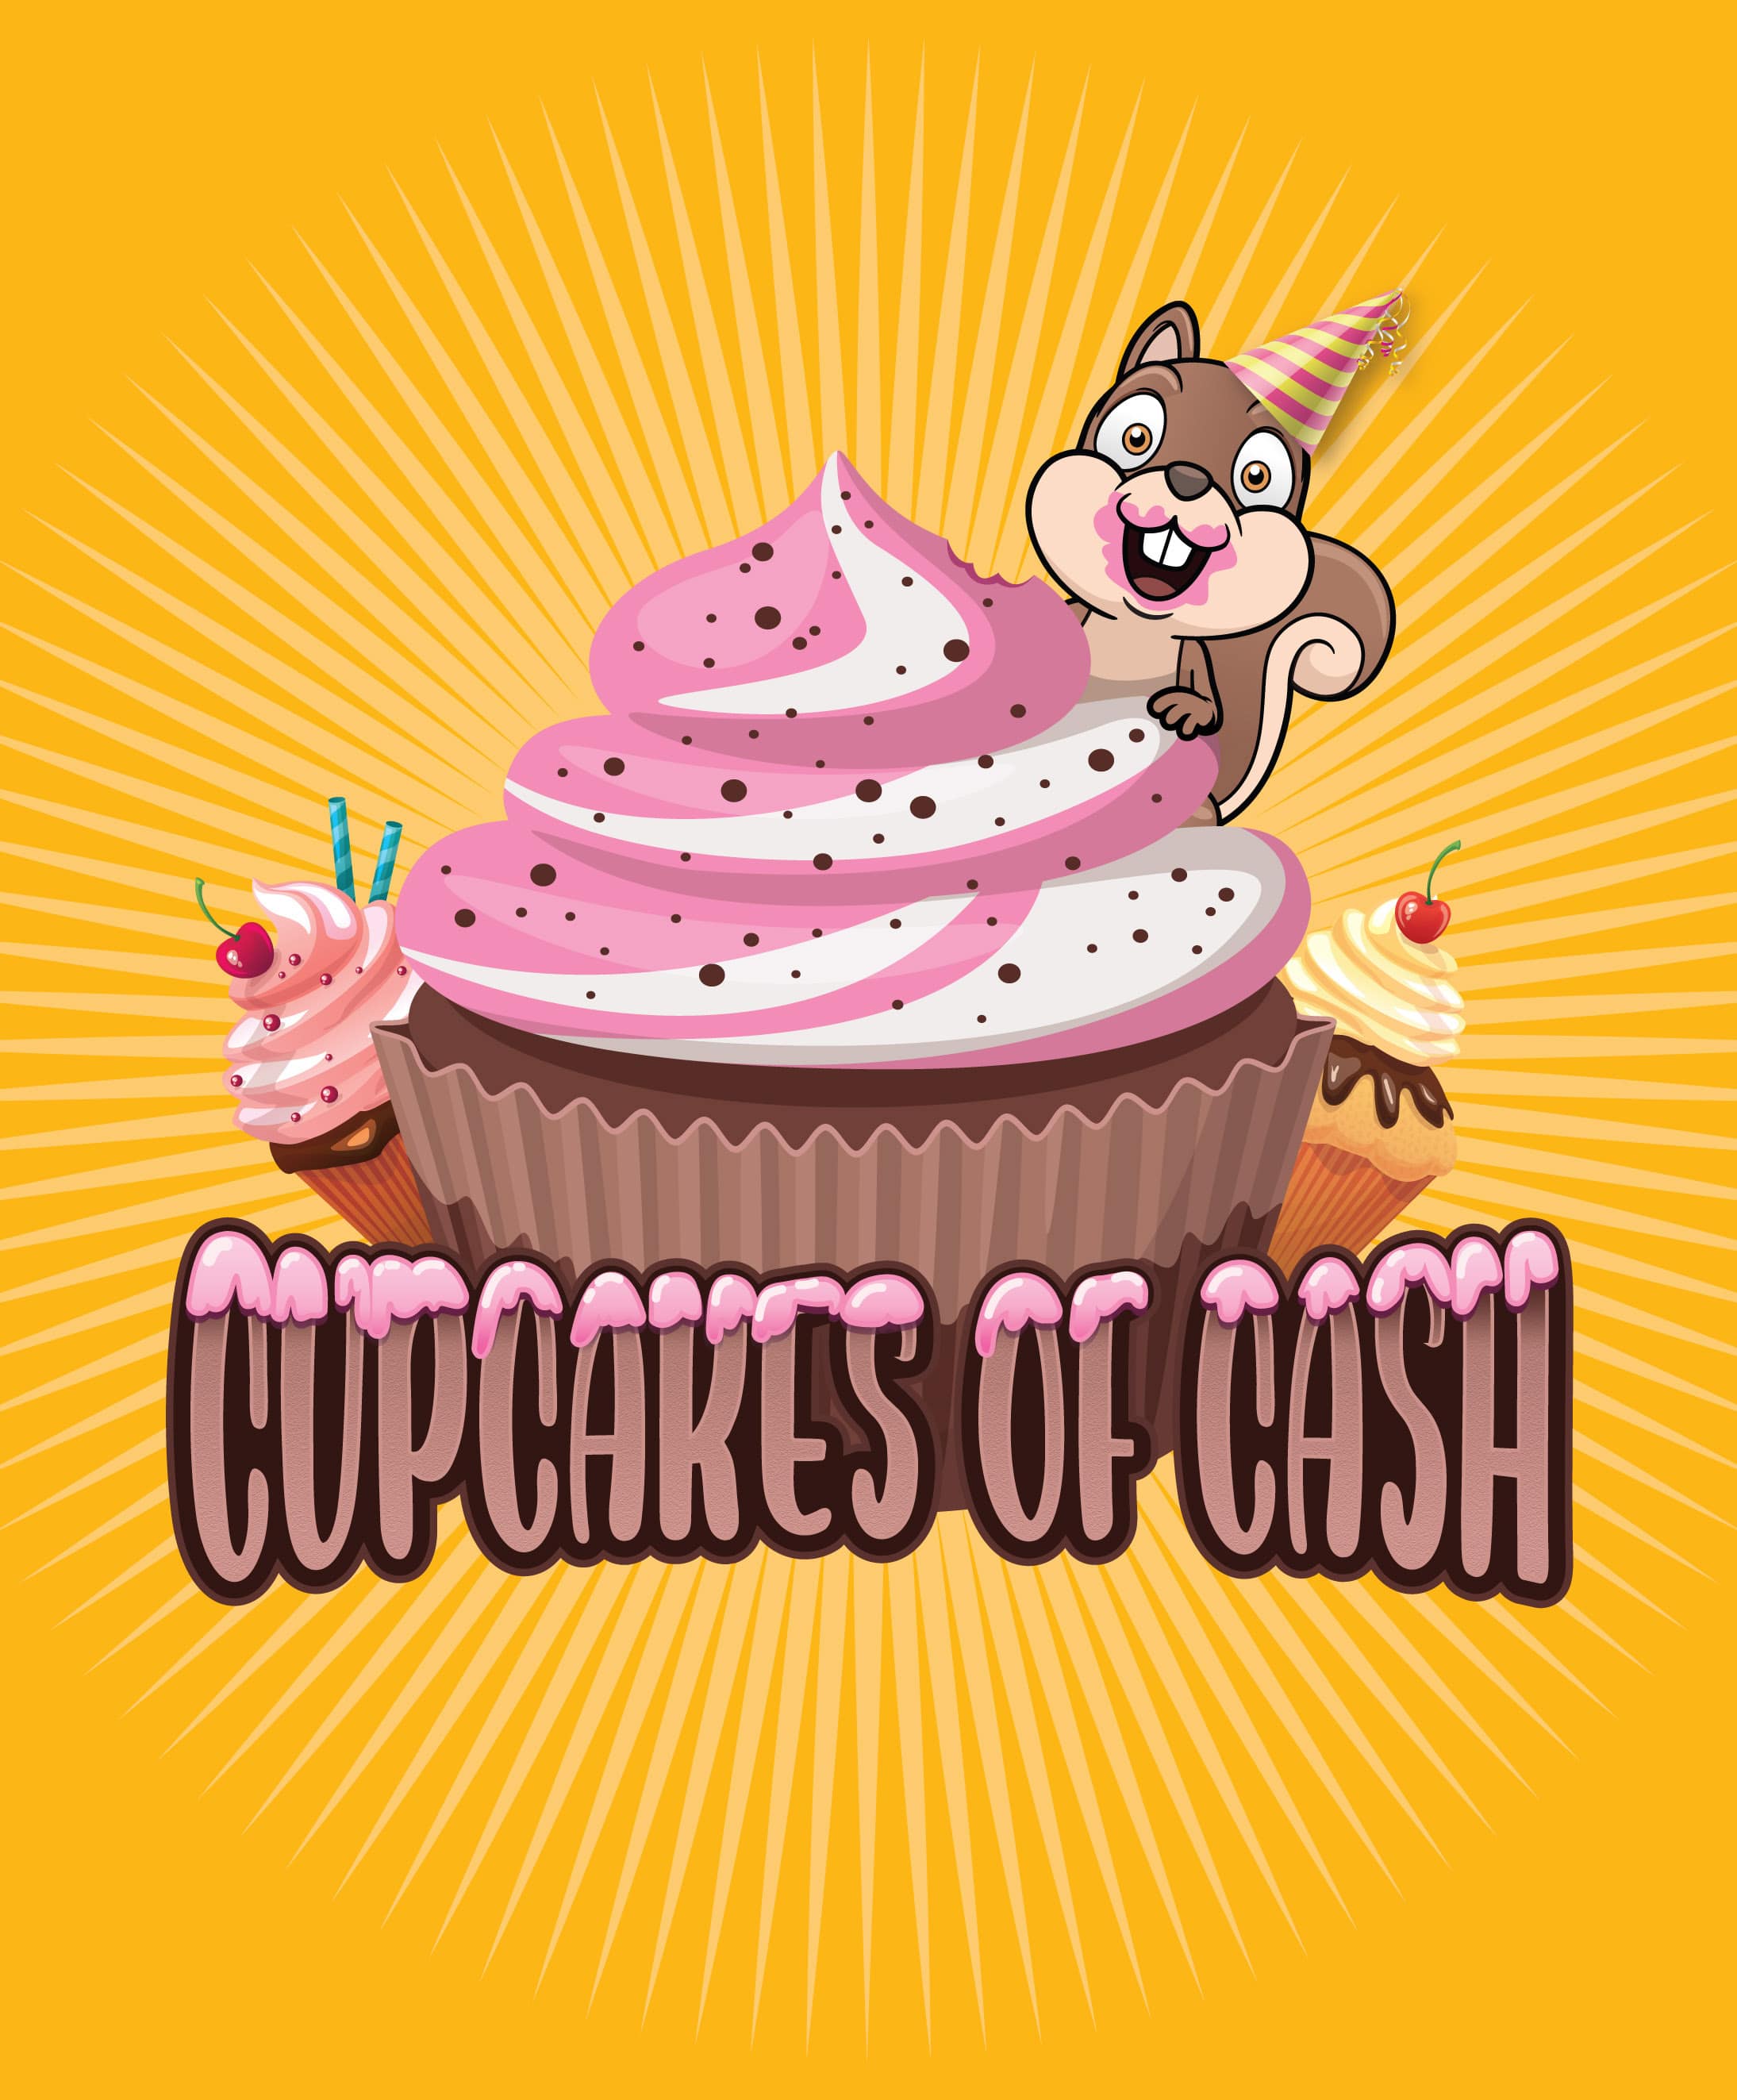 Cupcakes of Cash